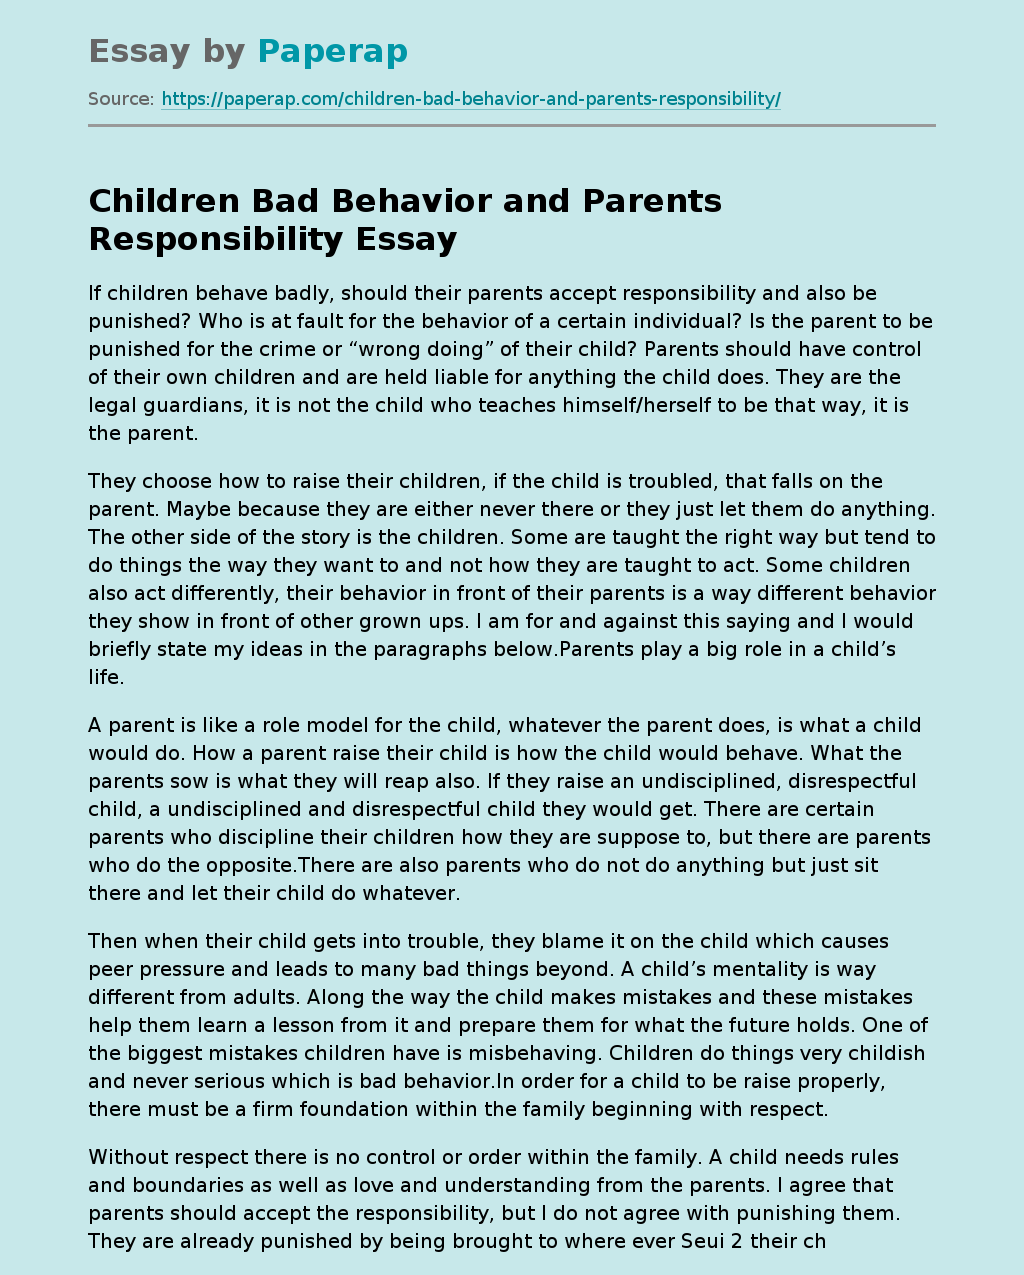 Children Bad Behavior and Parents Responsibility